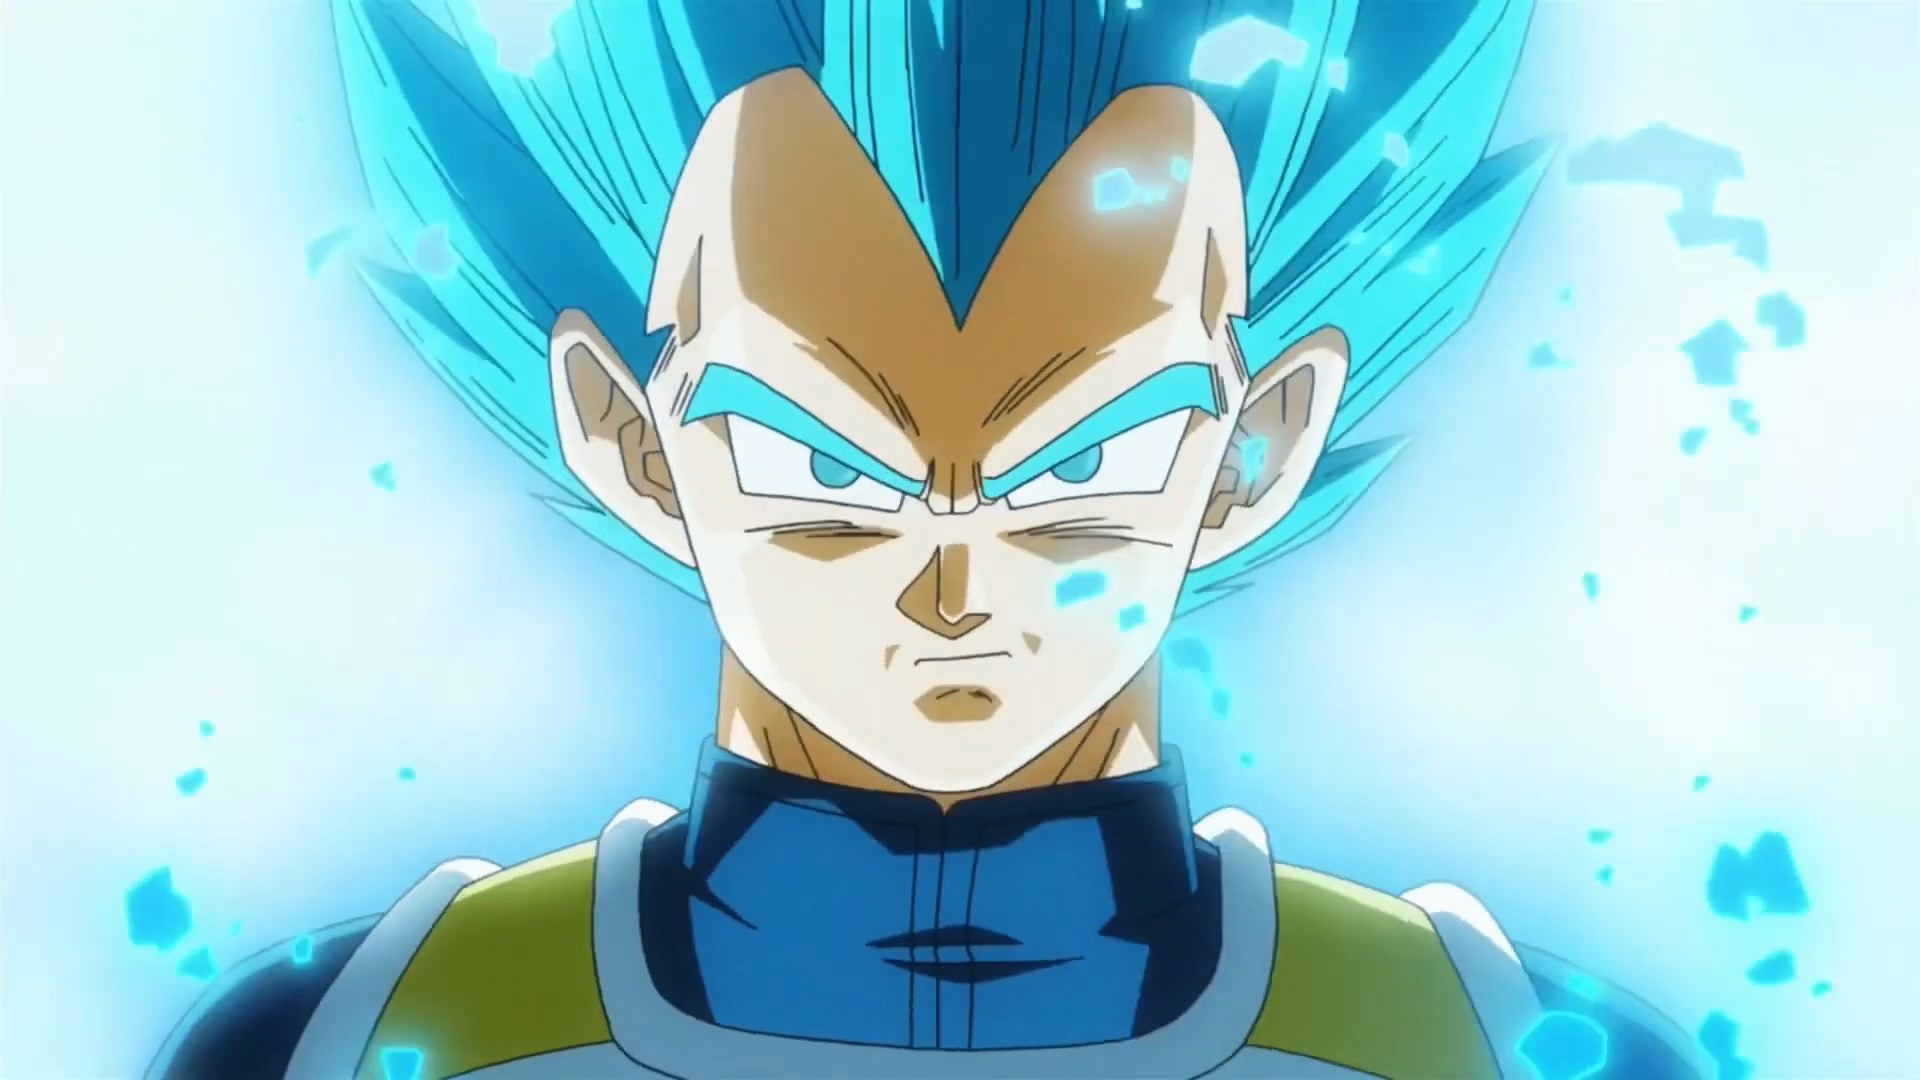 Vegeta as a Super Saiyan Blue in &quot;Dragon Ball Z: Resurrection &#x27;F&#x27;&quot;